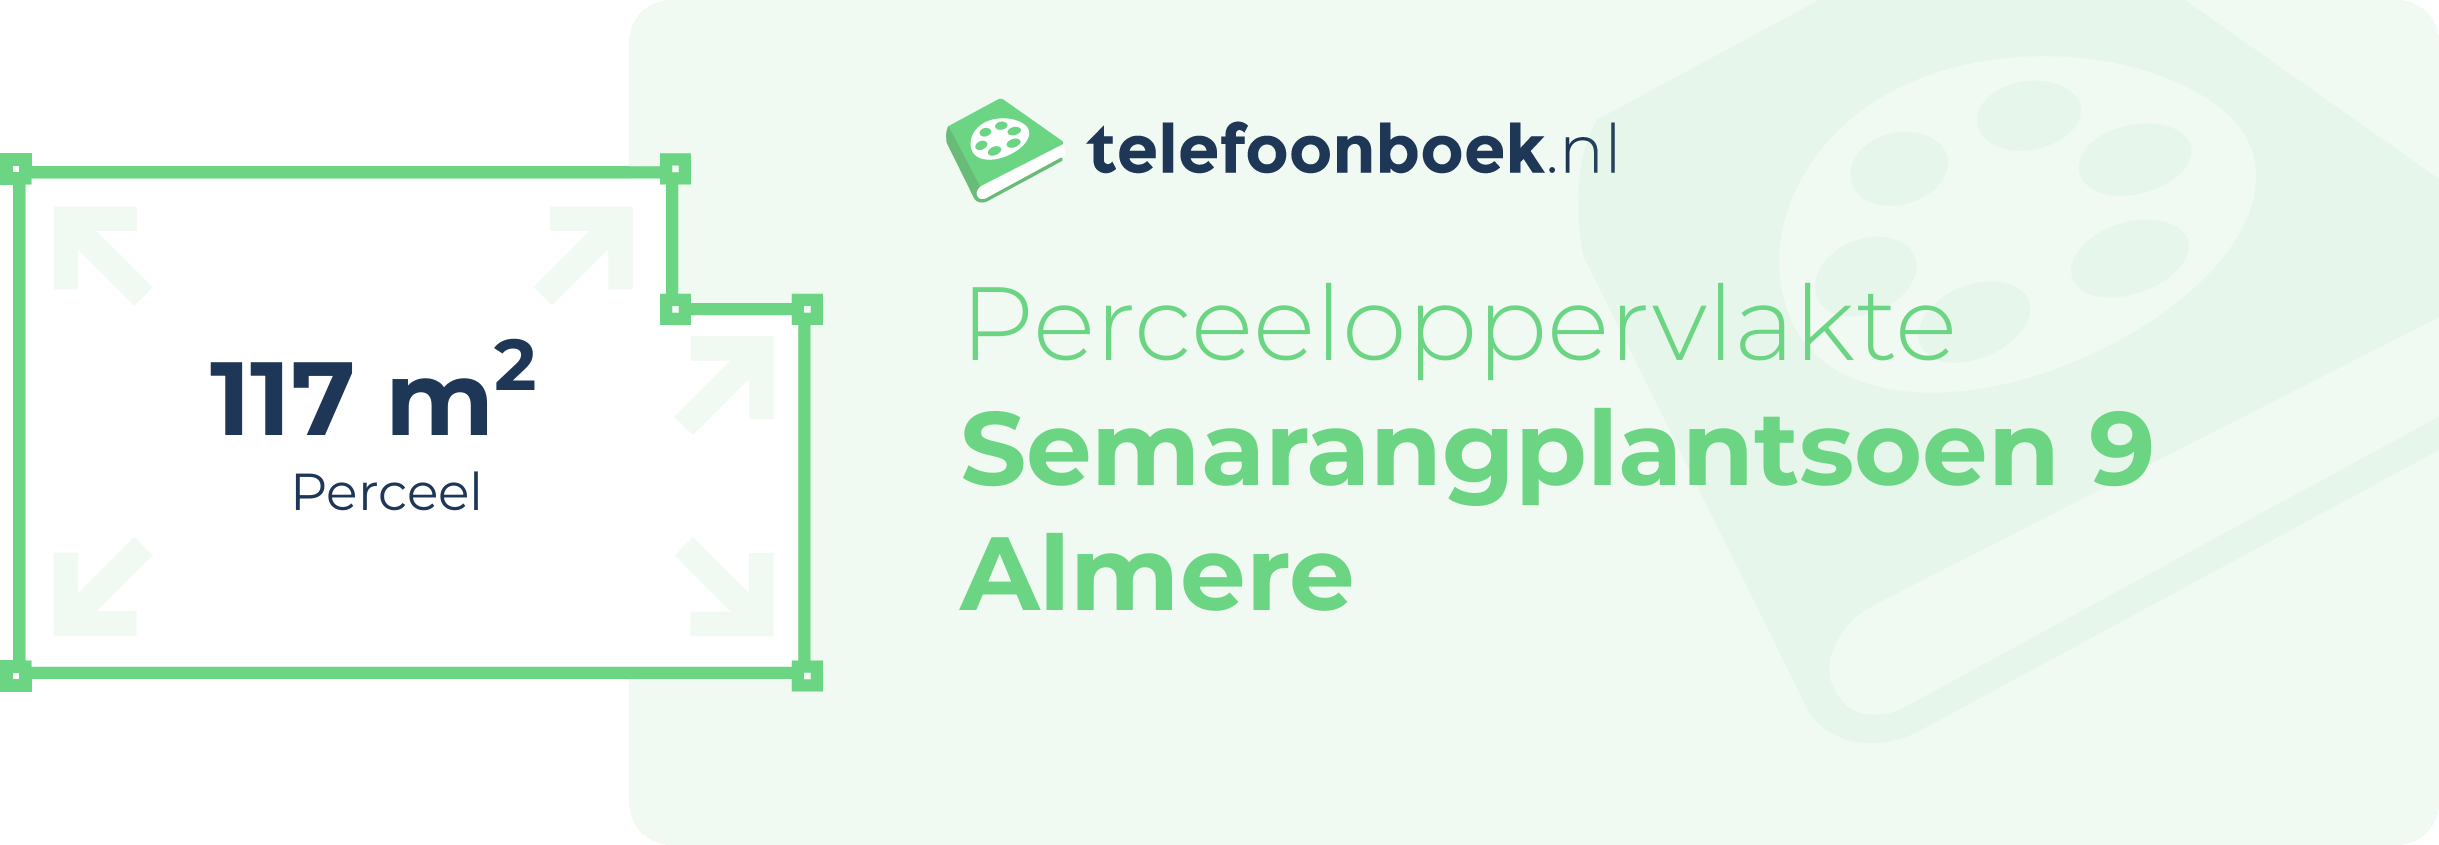 Perceeloppervlakte Semarangplantsoen 9 Almere